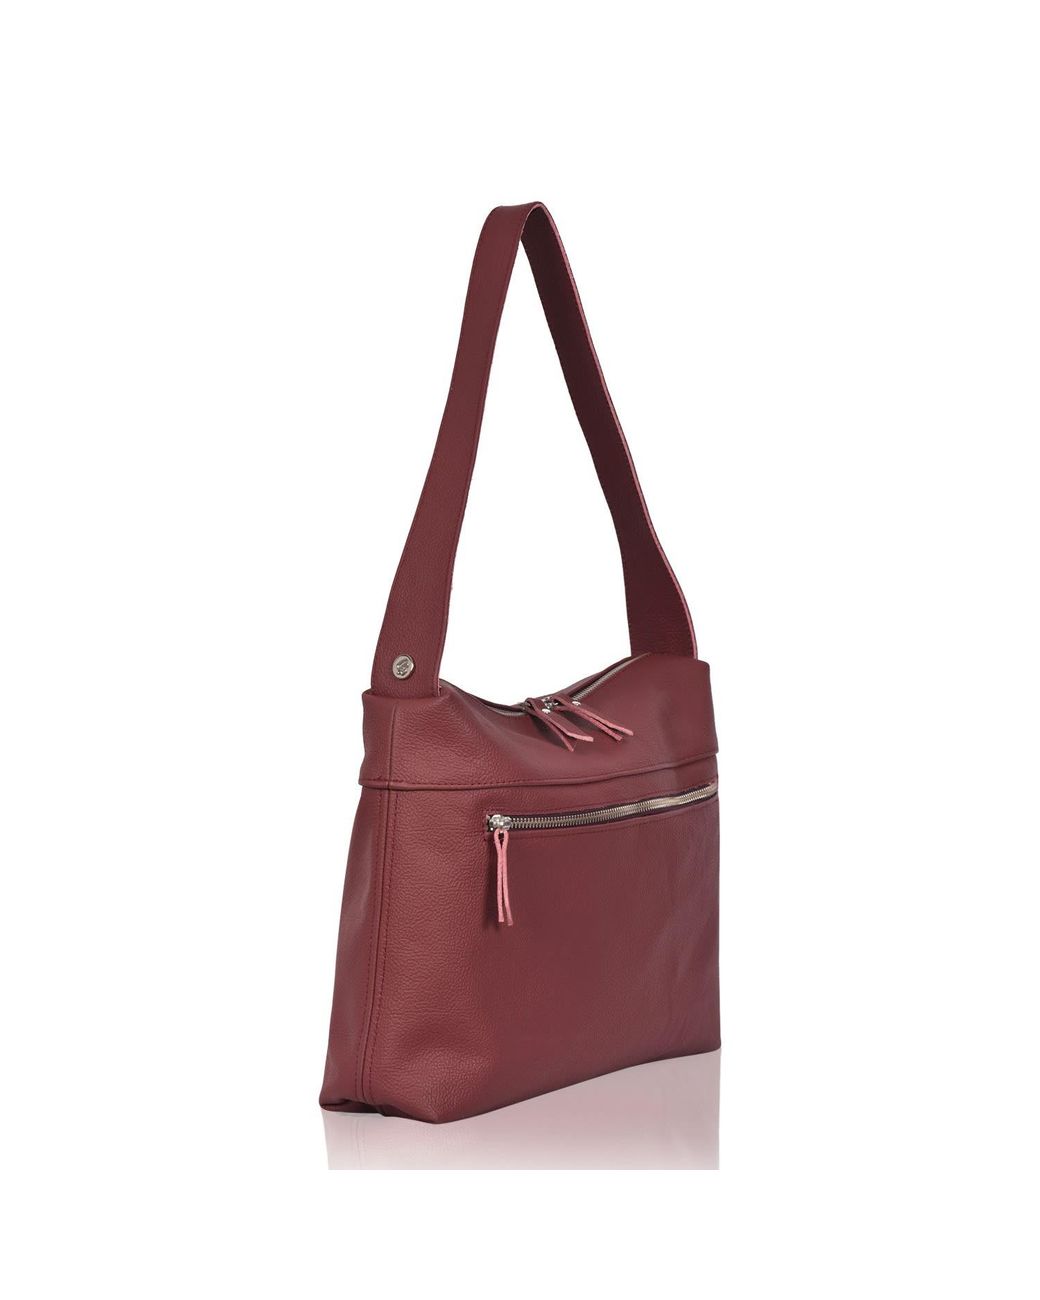 Lizzie Fortunato Peach After School Bag | Bags, Beige handbags, School bags